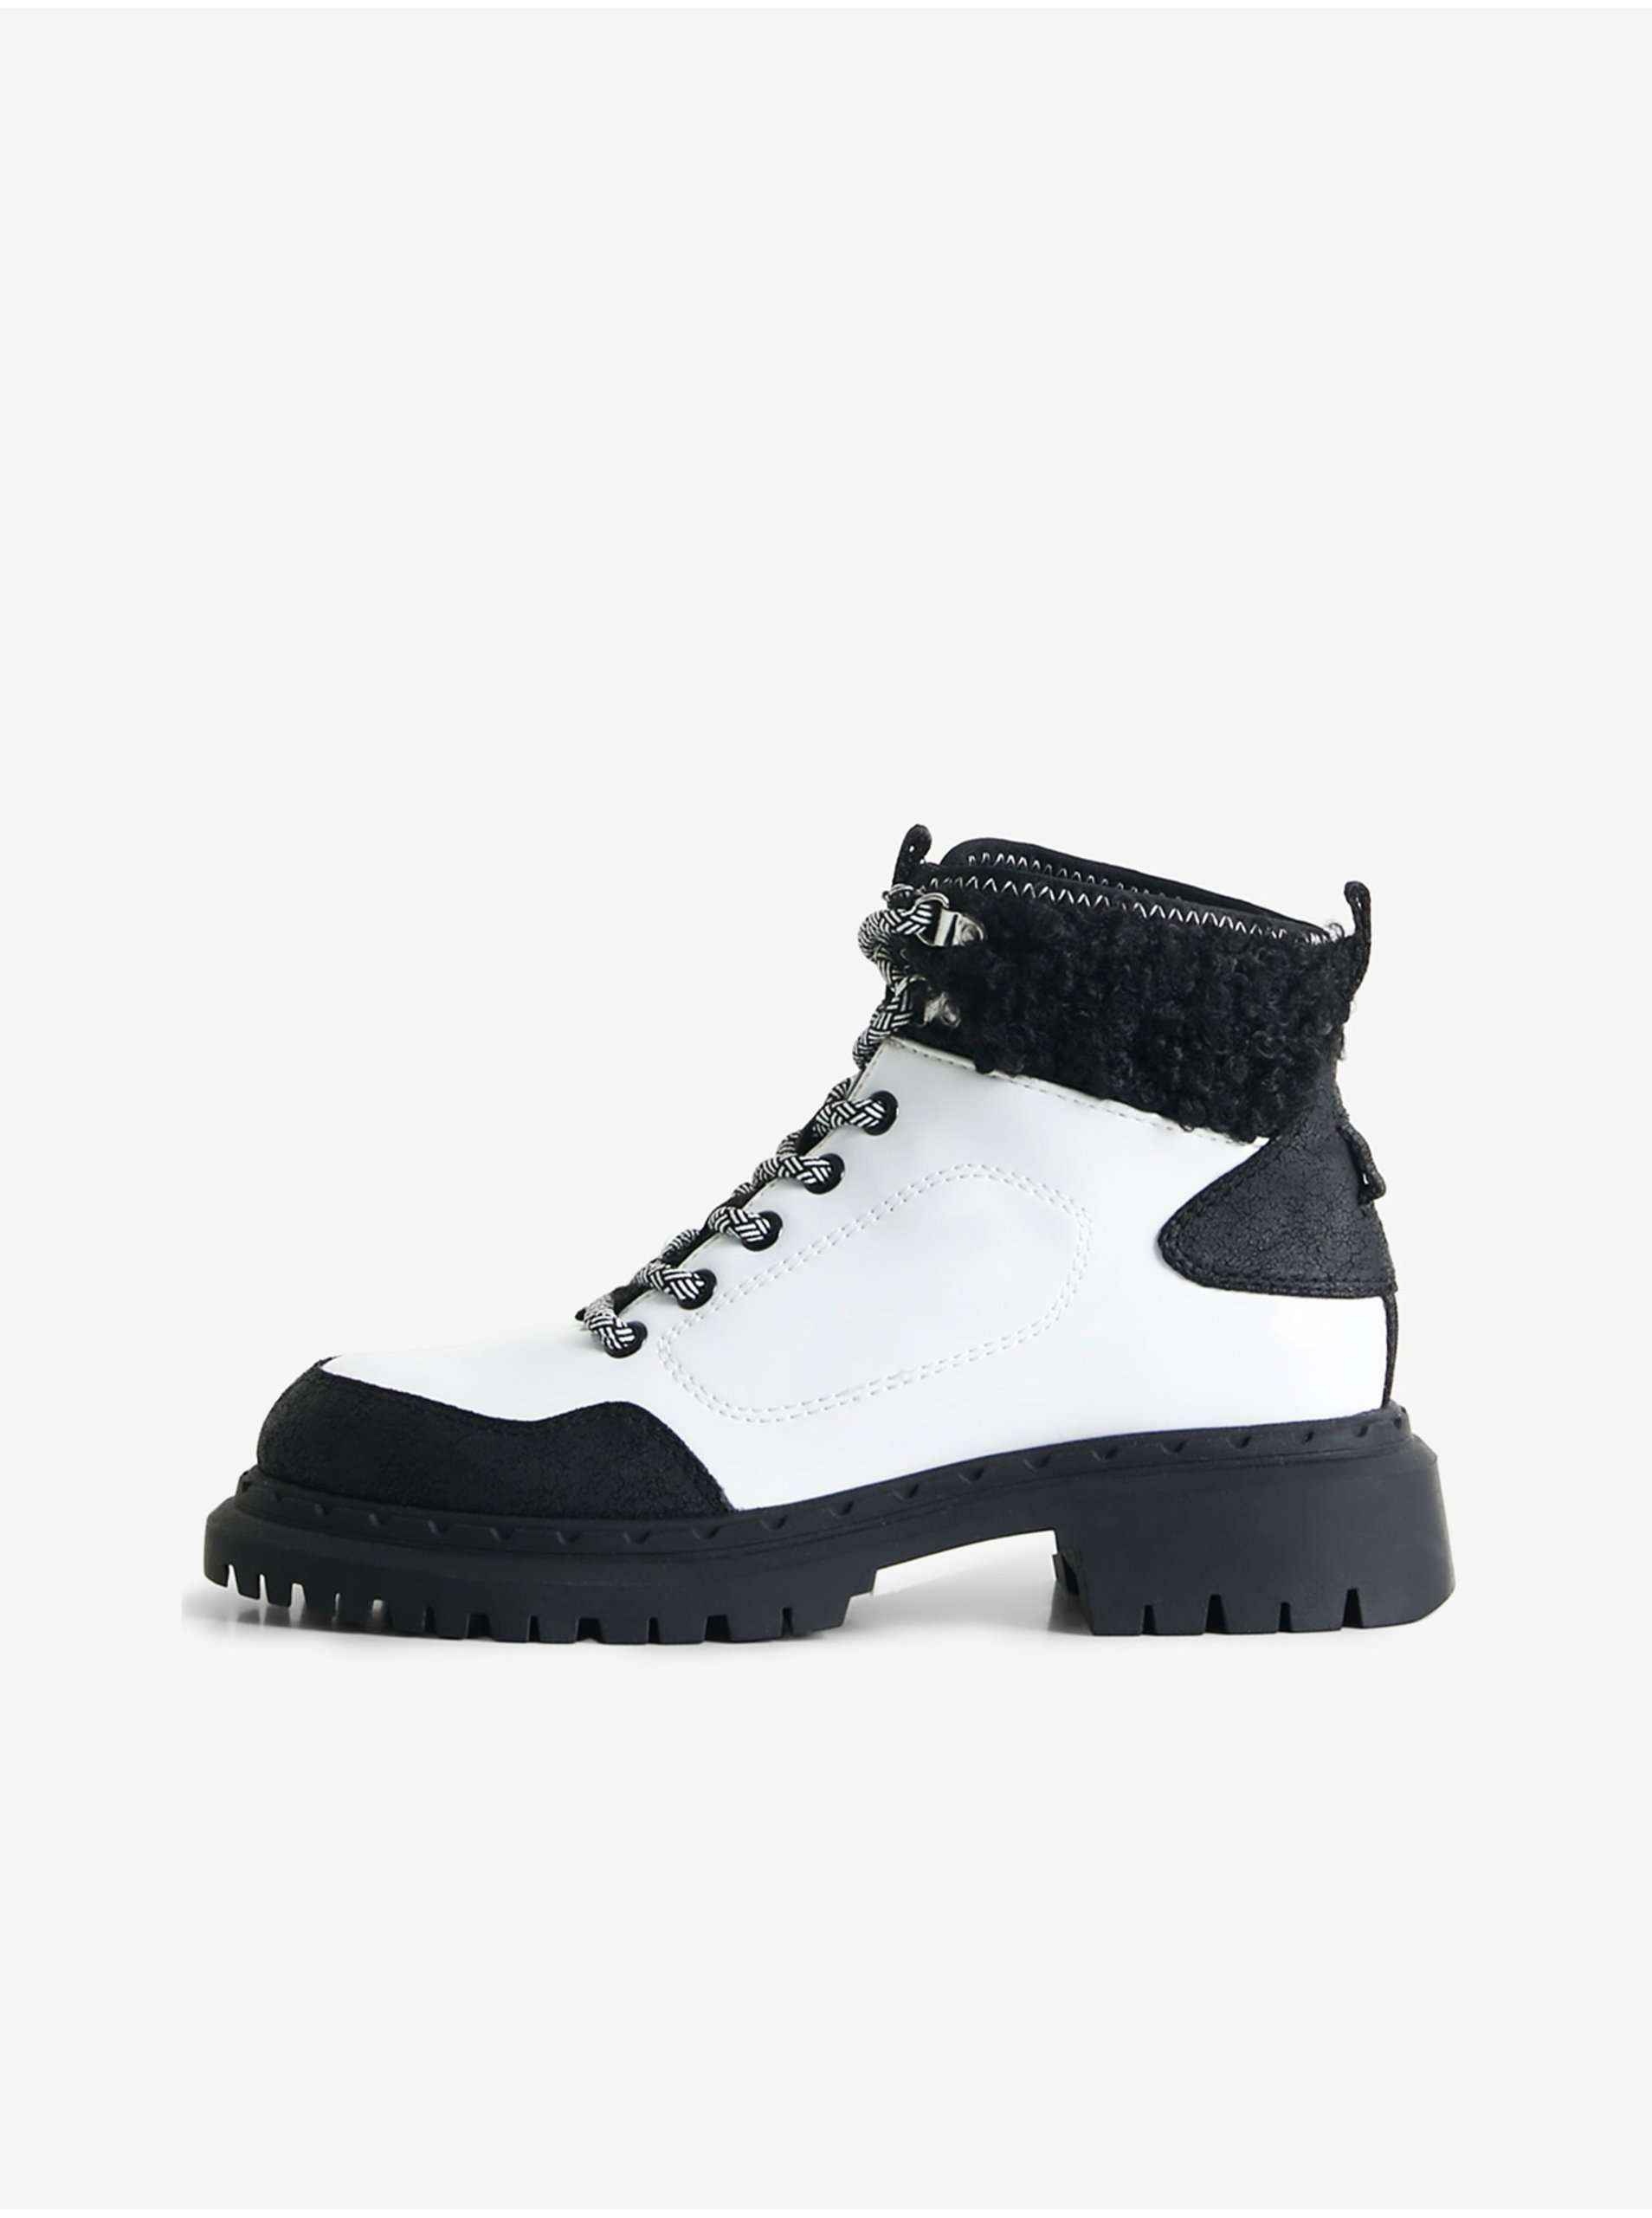 Black & White Desigual Trekking White Ankle Boots - Ladies